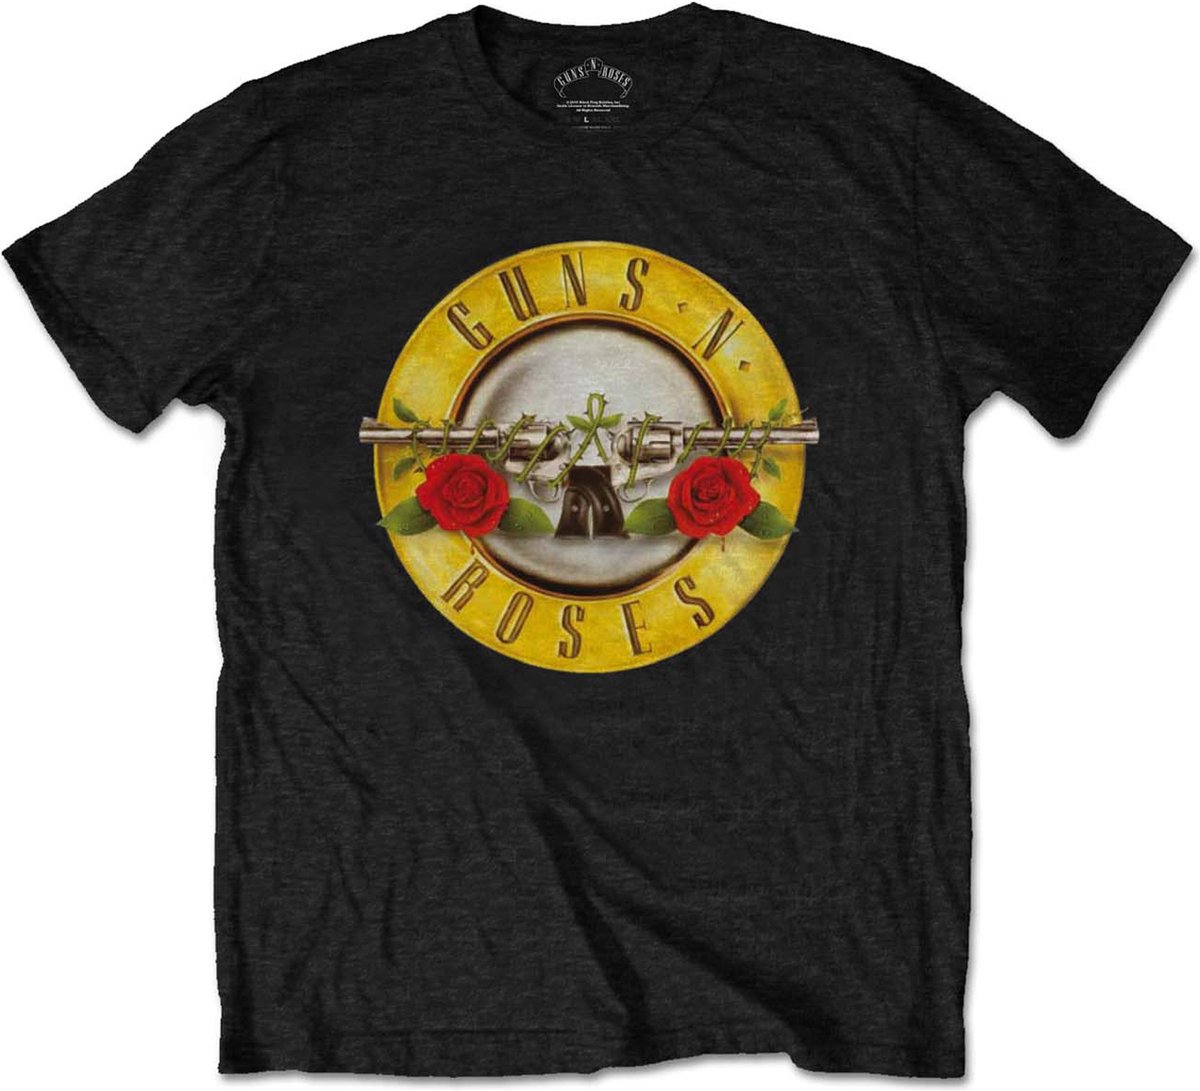 Guns N Roses Classic Logo T-shirt S